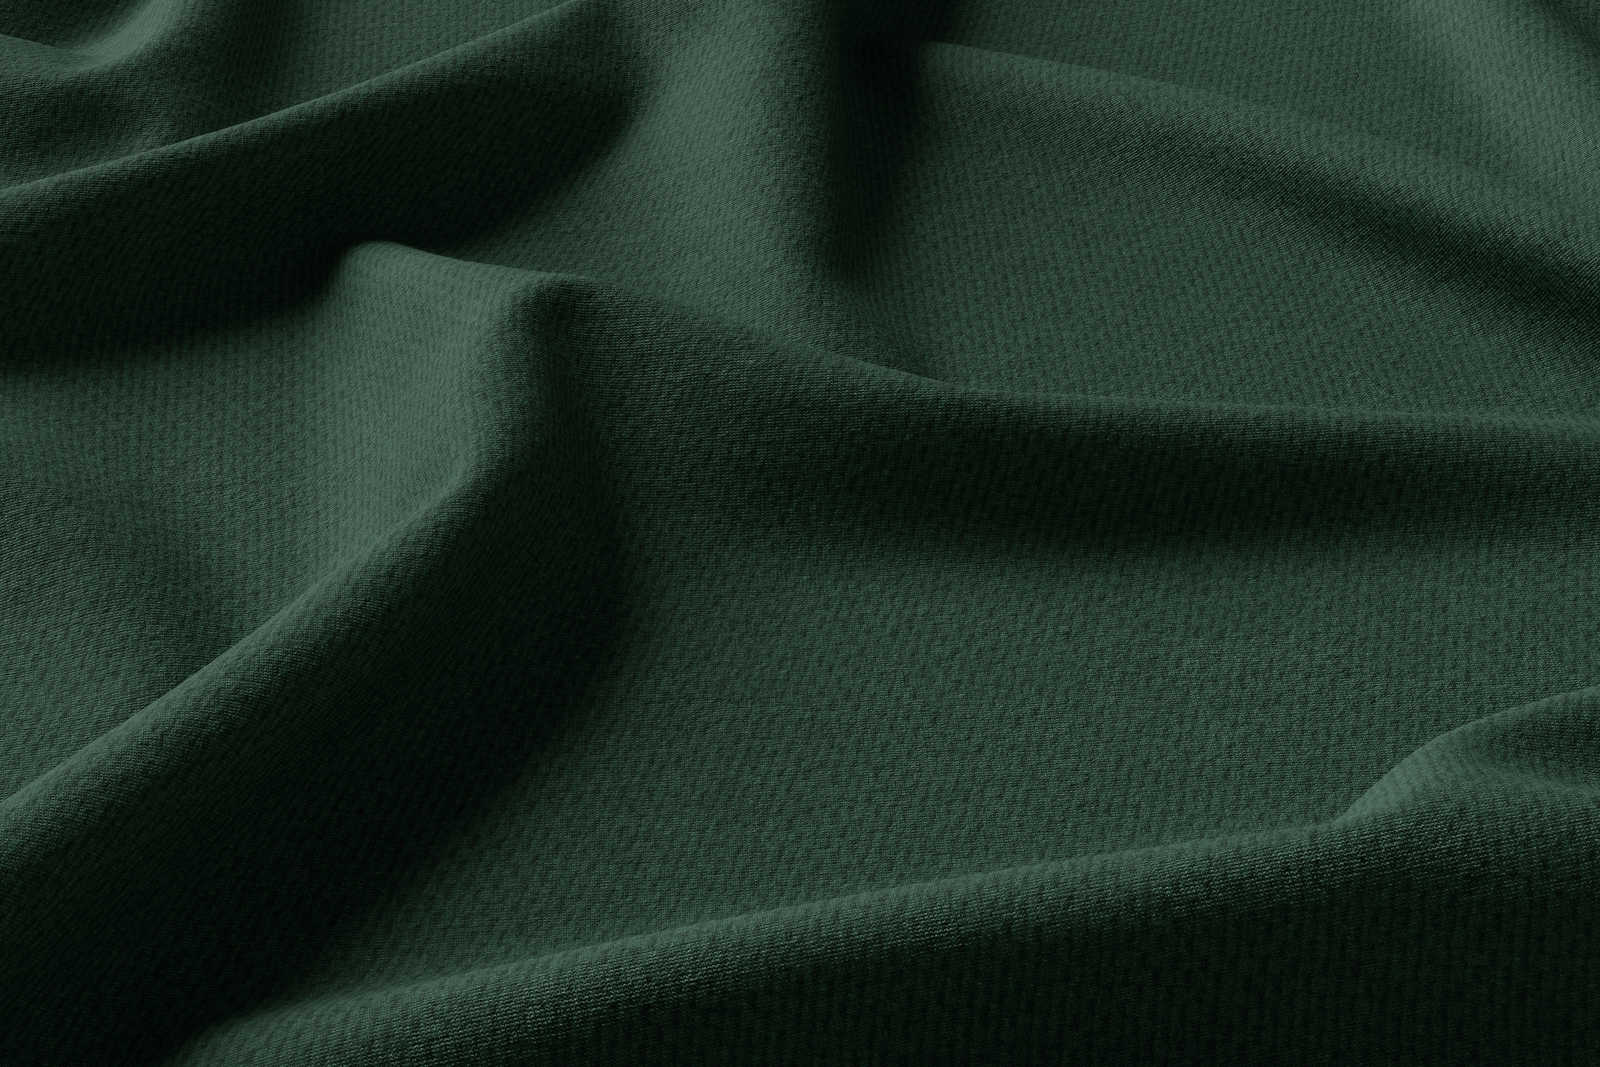             Foulard decorativo 140 cm x 245 cm in fibra artificiale verde scuro
        